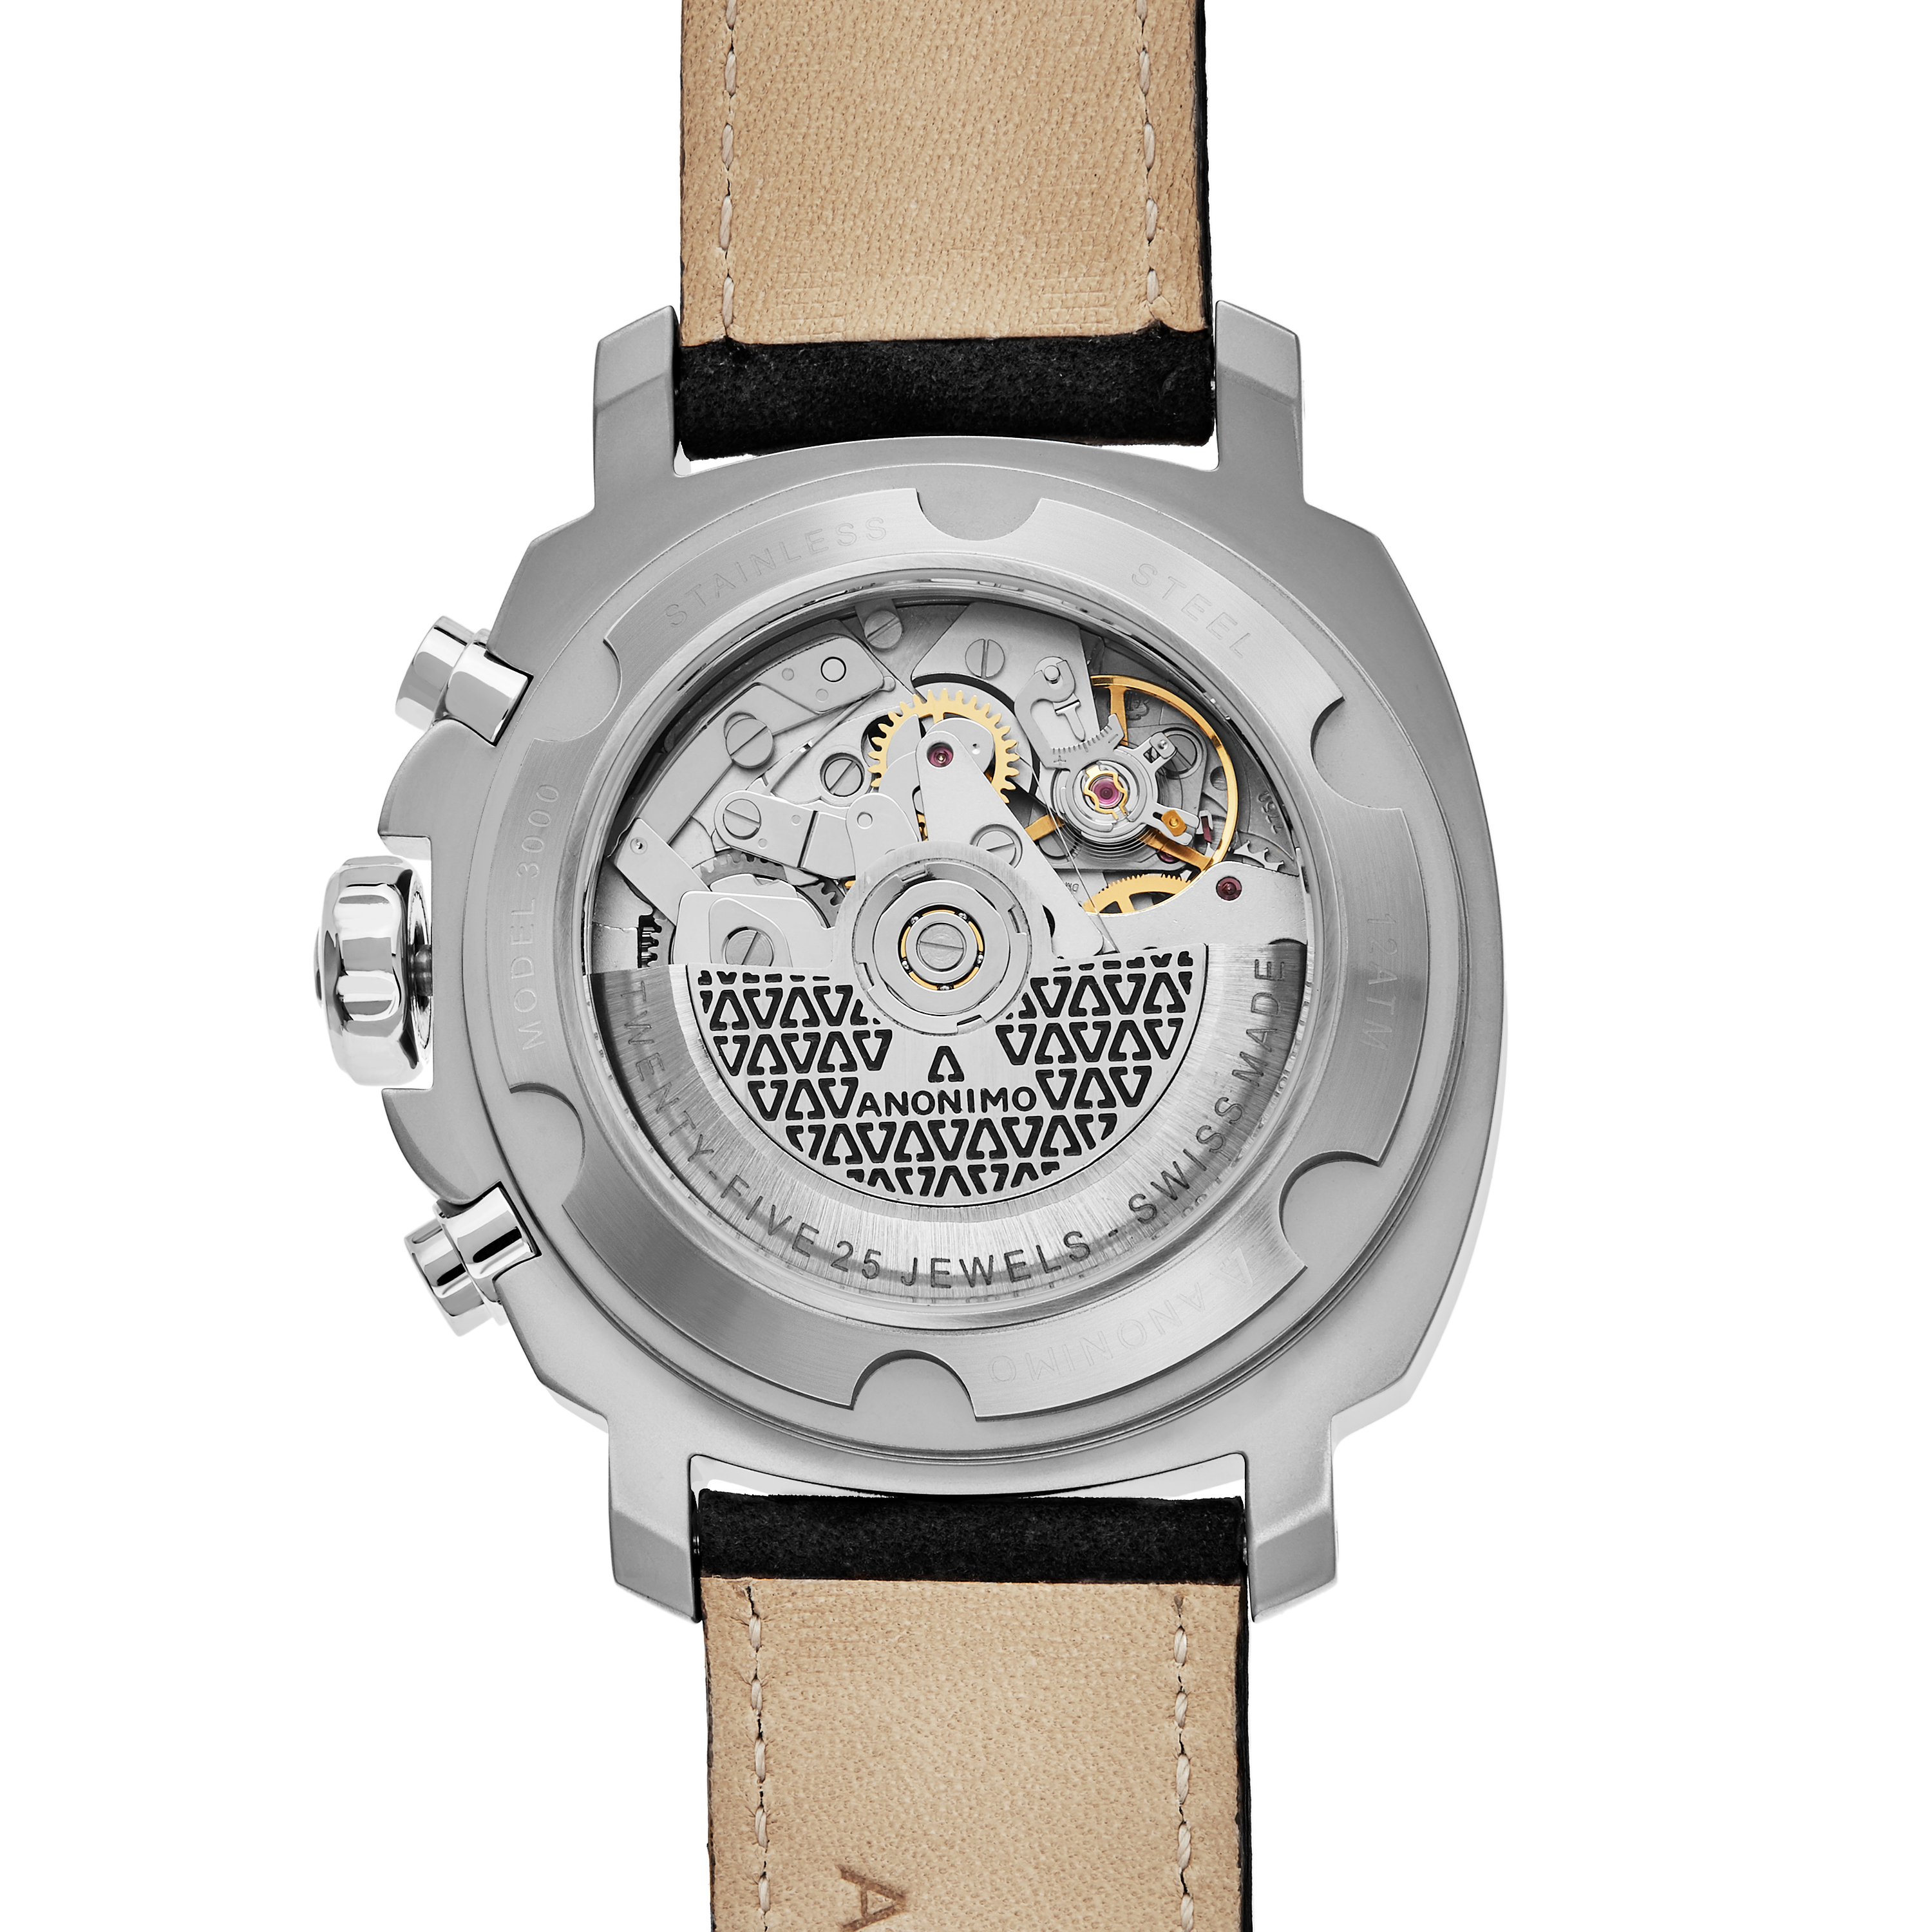 Anonimo Cronoscopio Men's Watch Model AM-3000.01.003.A01 Thumbnail 3